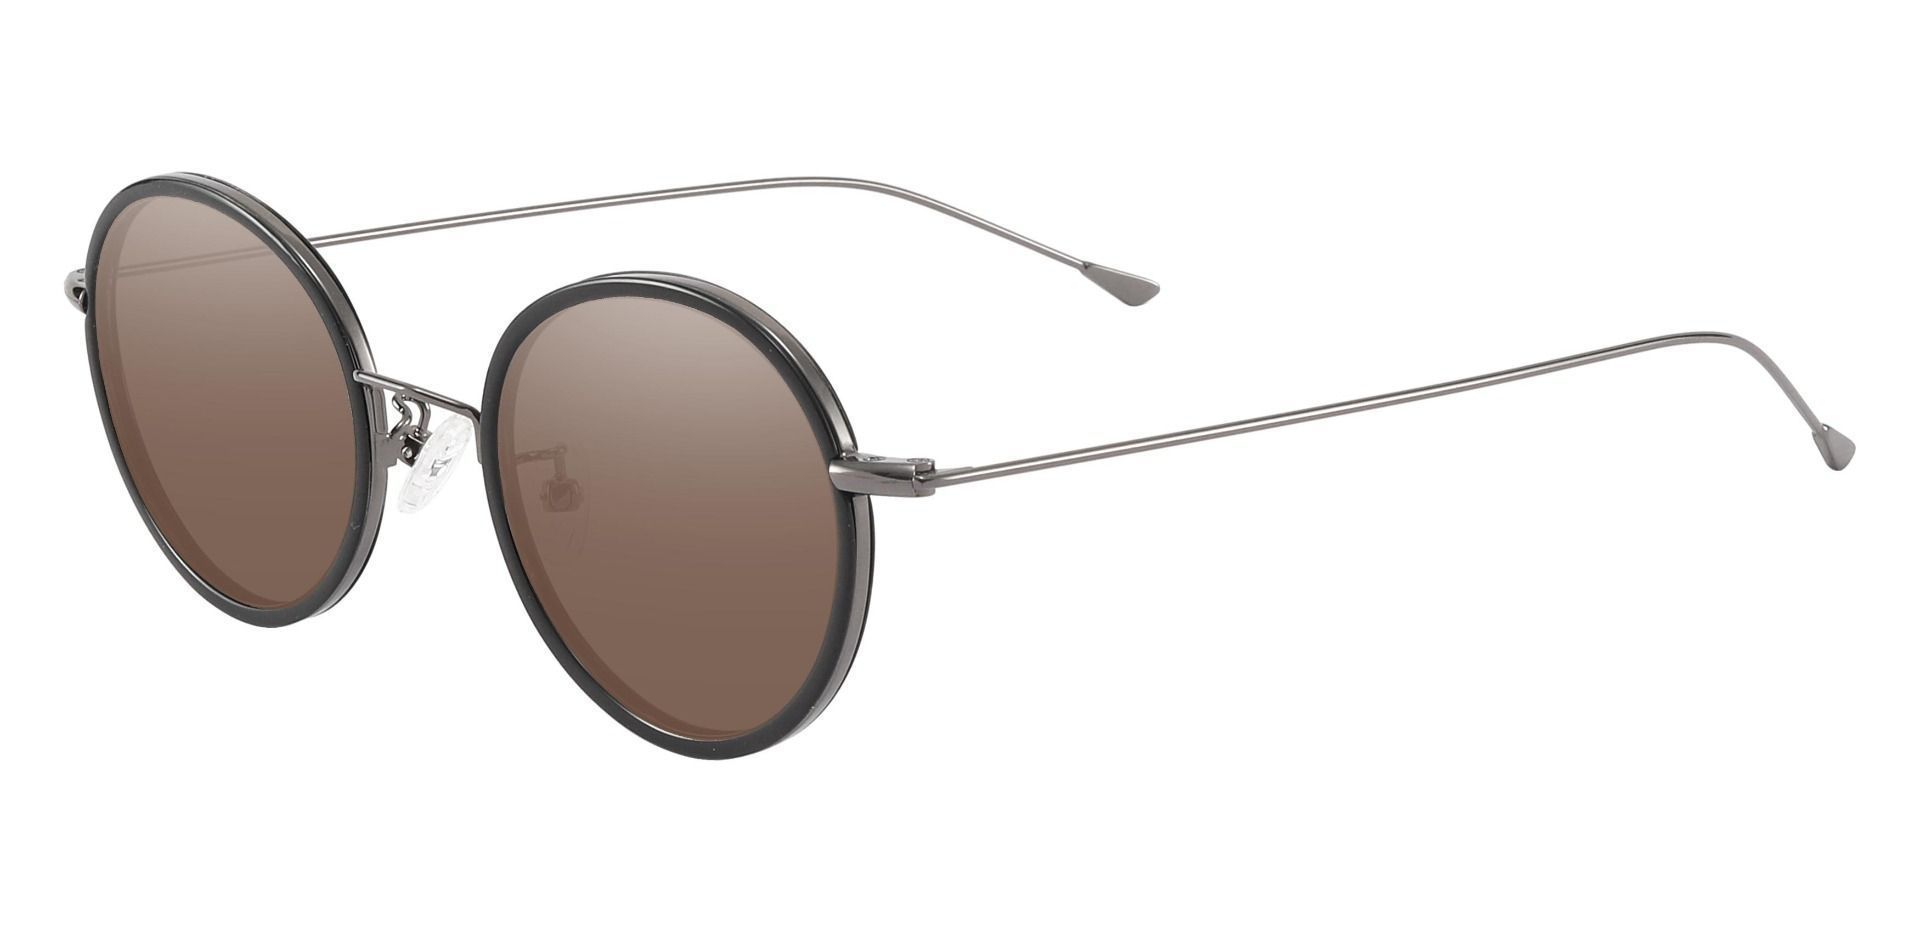 Malverne Oval Progressive Sunglasses - Black Frame With Brown Lenses